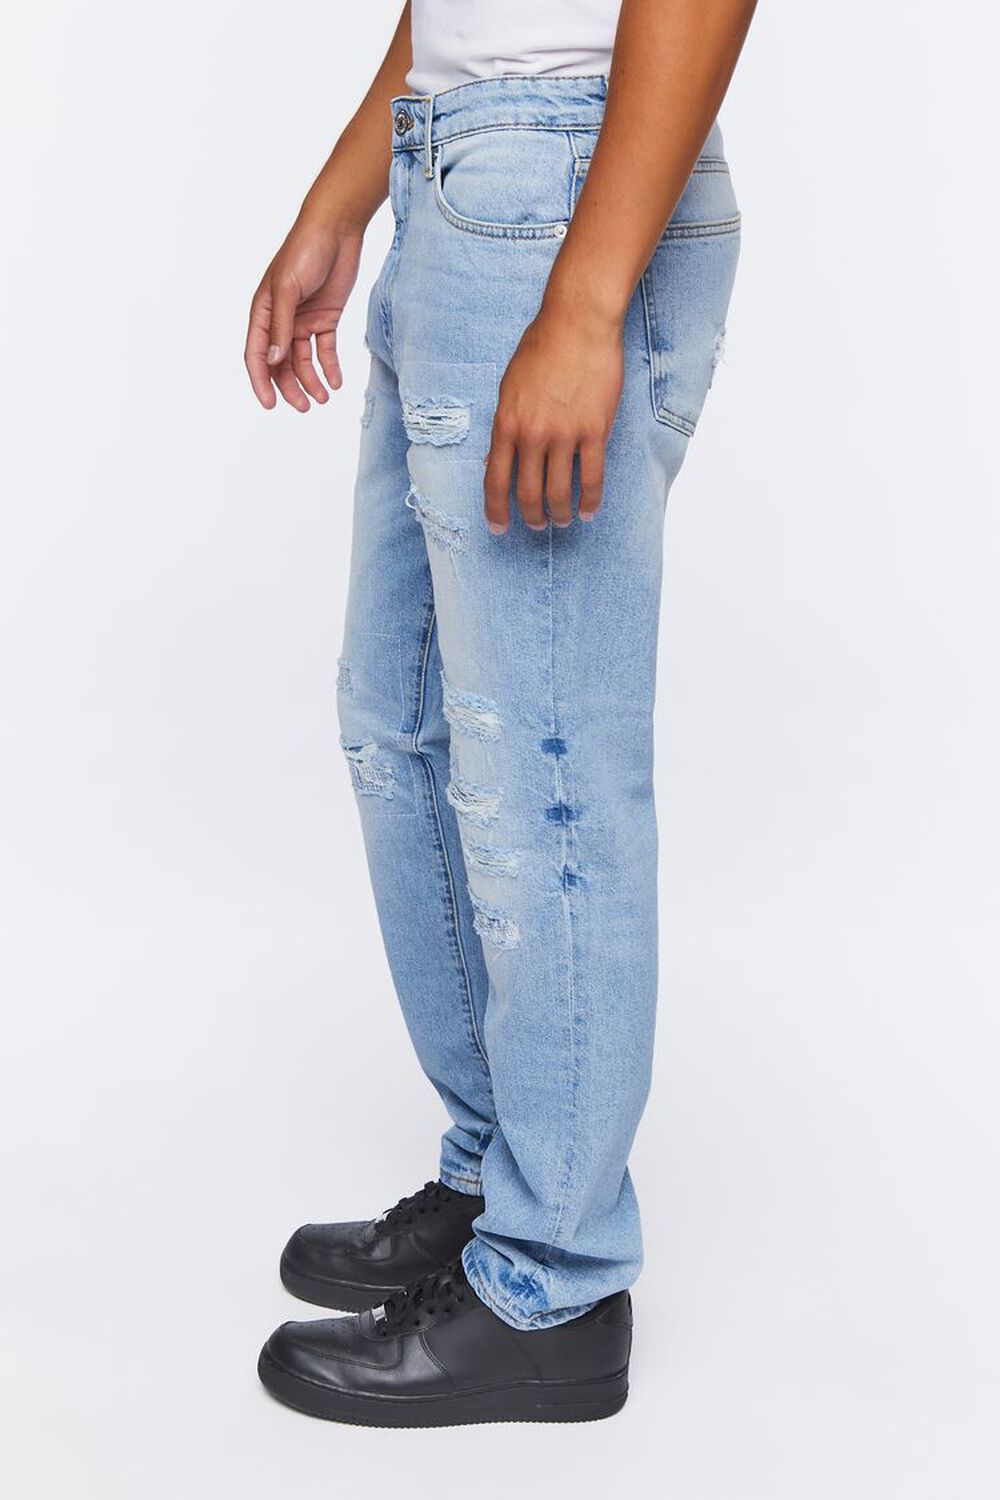 LIGHT DENIM Distressed Slim-Fit Jeans, image 3